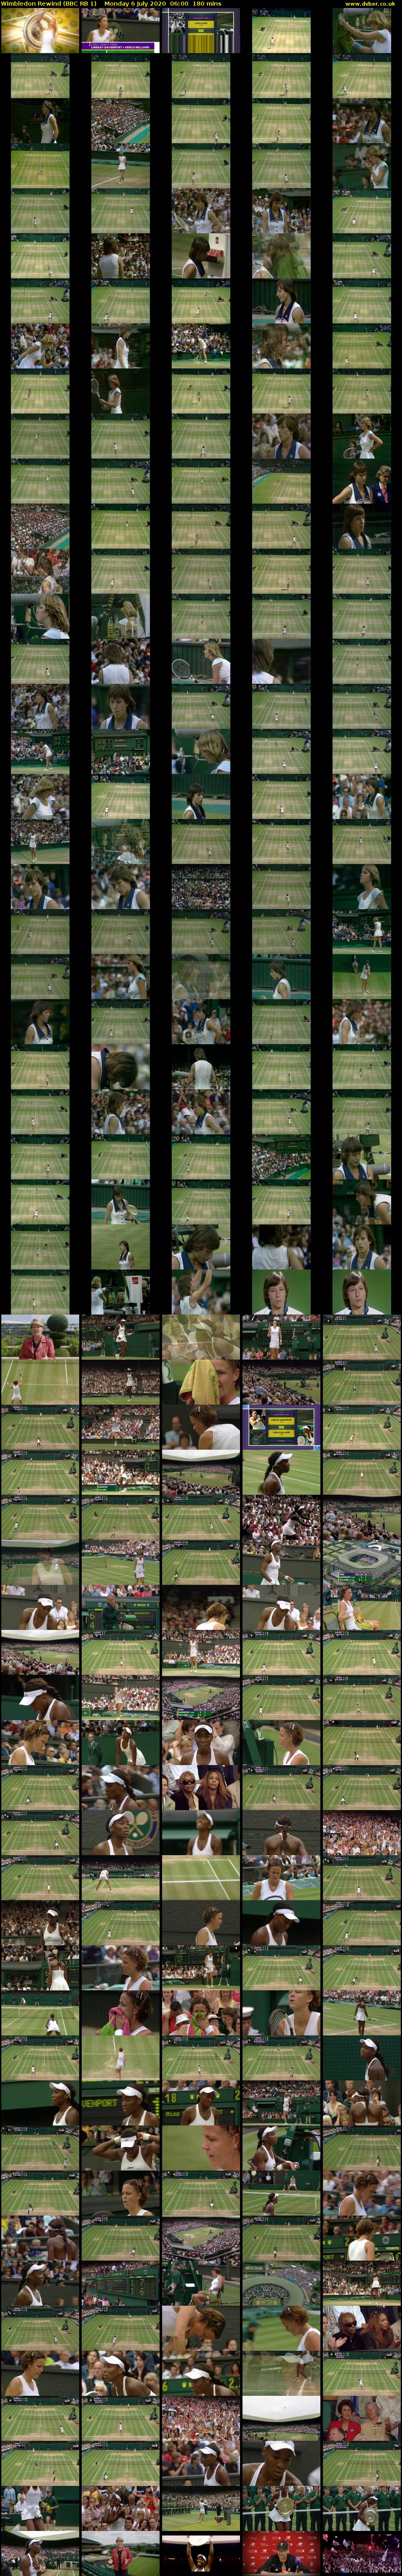 Wimbledon Rewind (BBC RB 1) Monday 6 July 2020 06:00 - 09:00